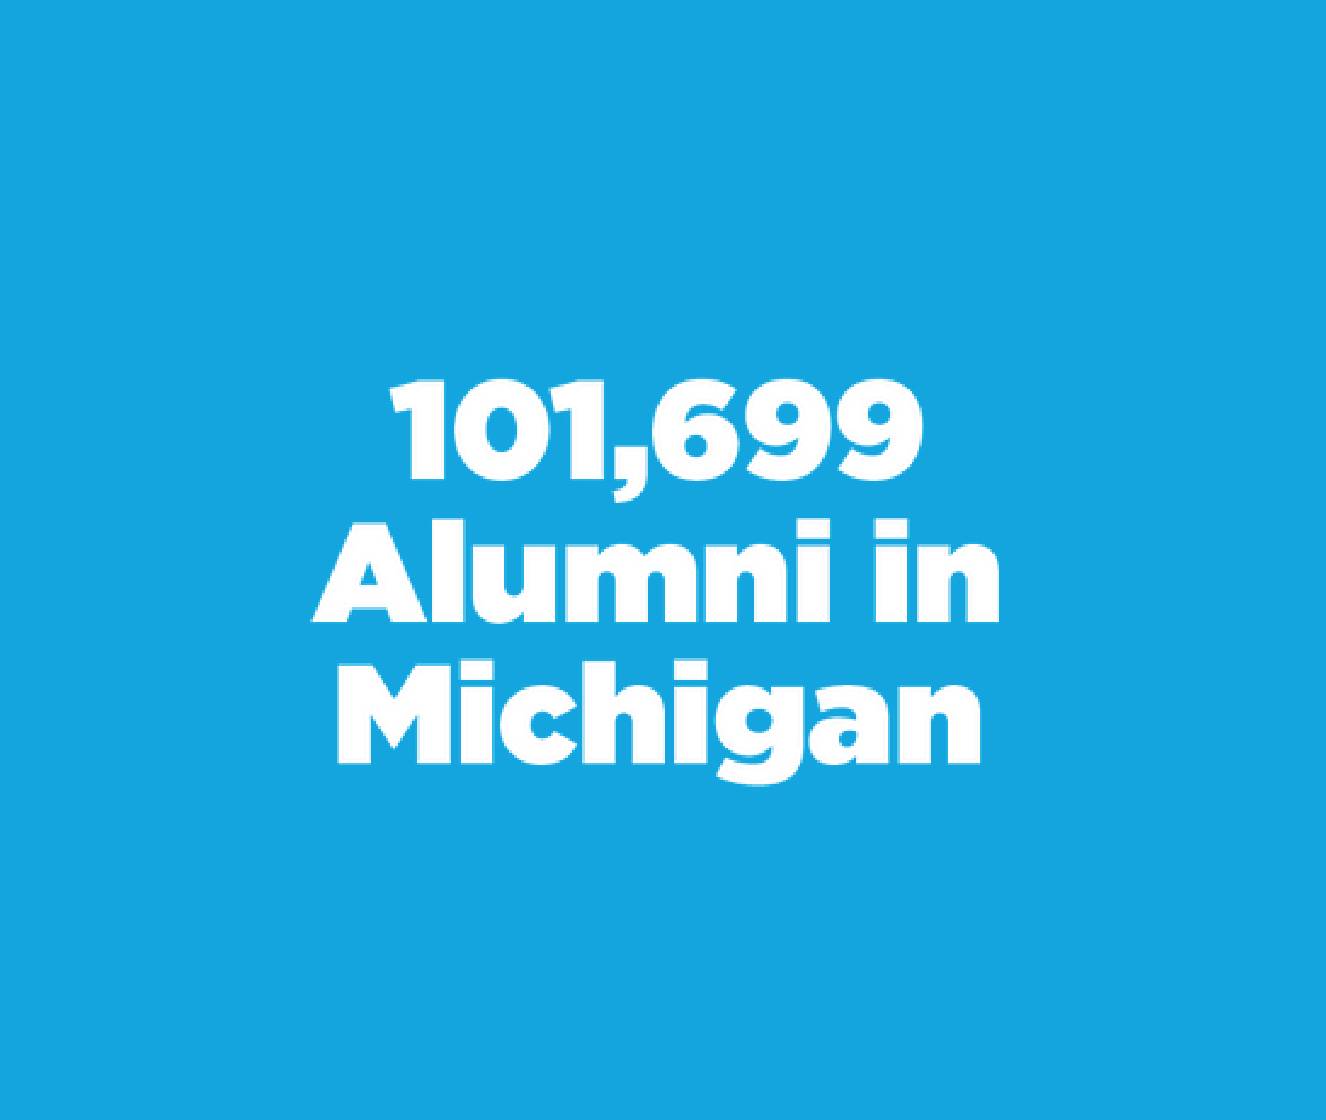 101,699 alumni in Michigan